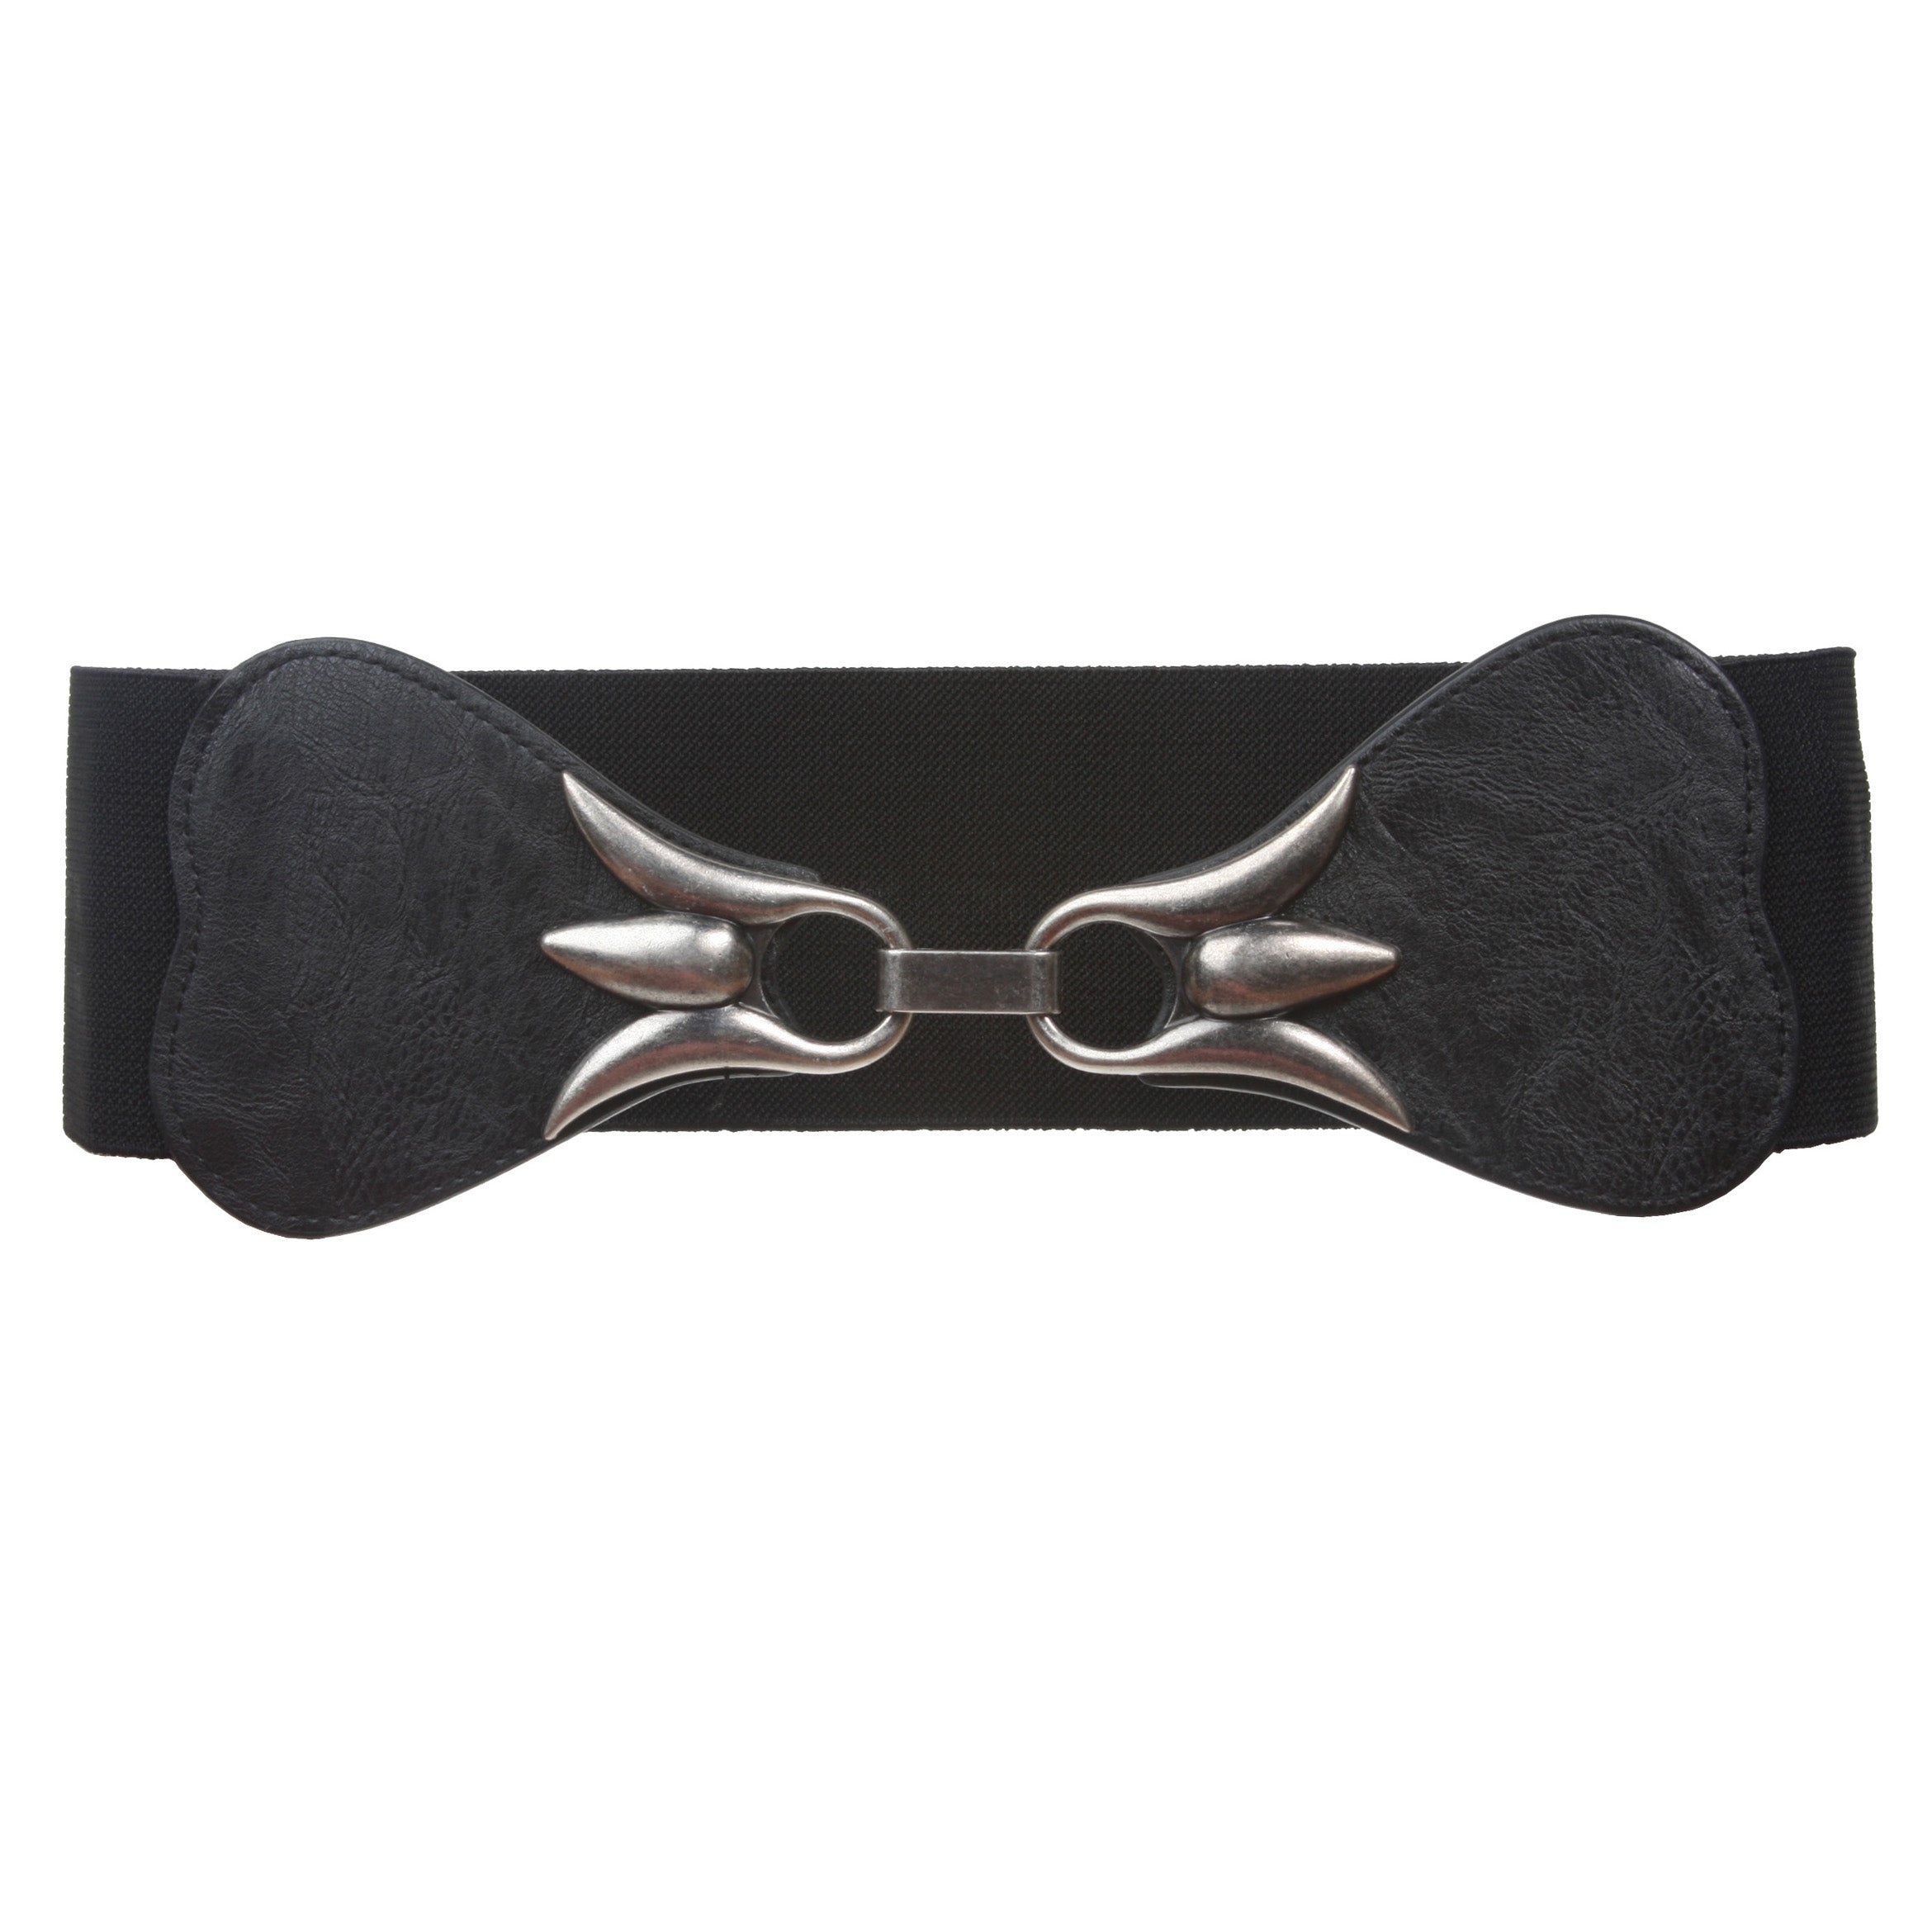 3" Wide High Waist Fashion Stretch Belt With Metal Hook Buckle